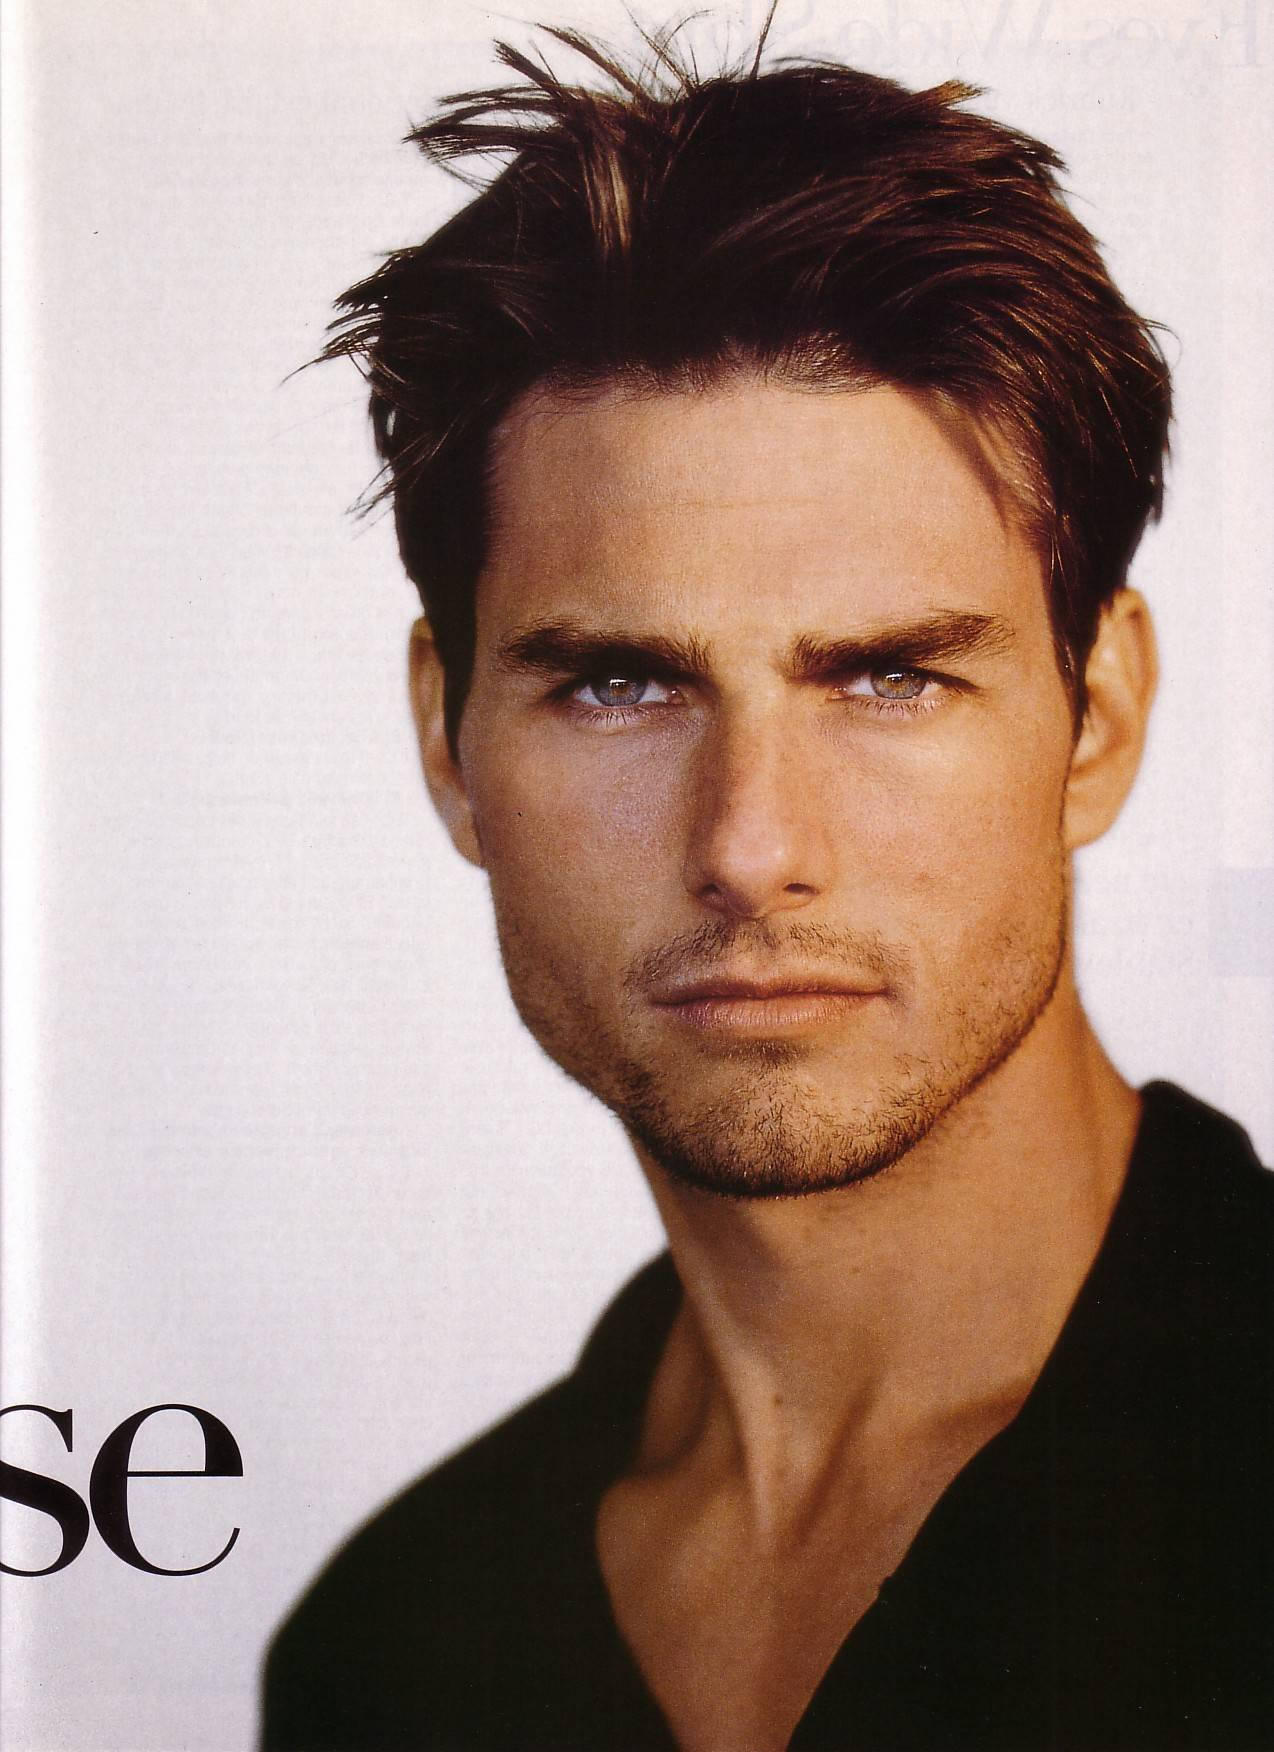 200+] Tom Cruise Wallpaper | Wallpapers.com